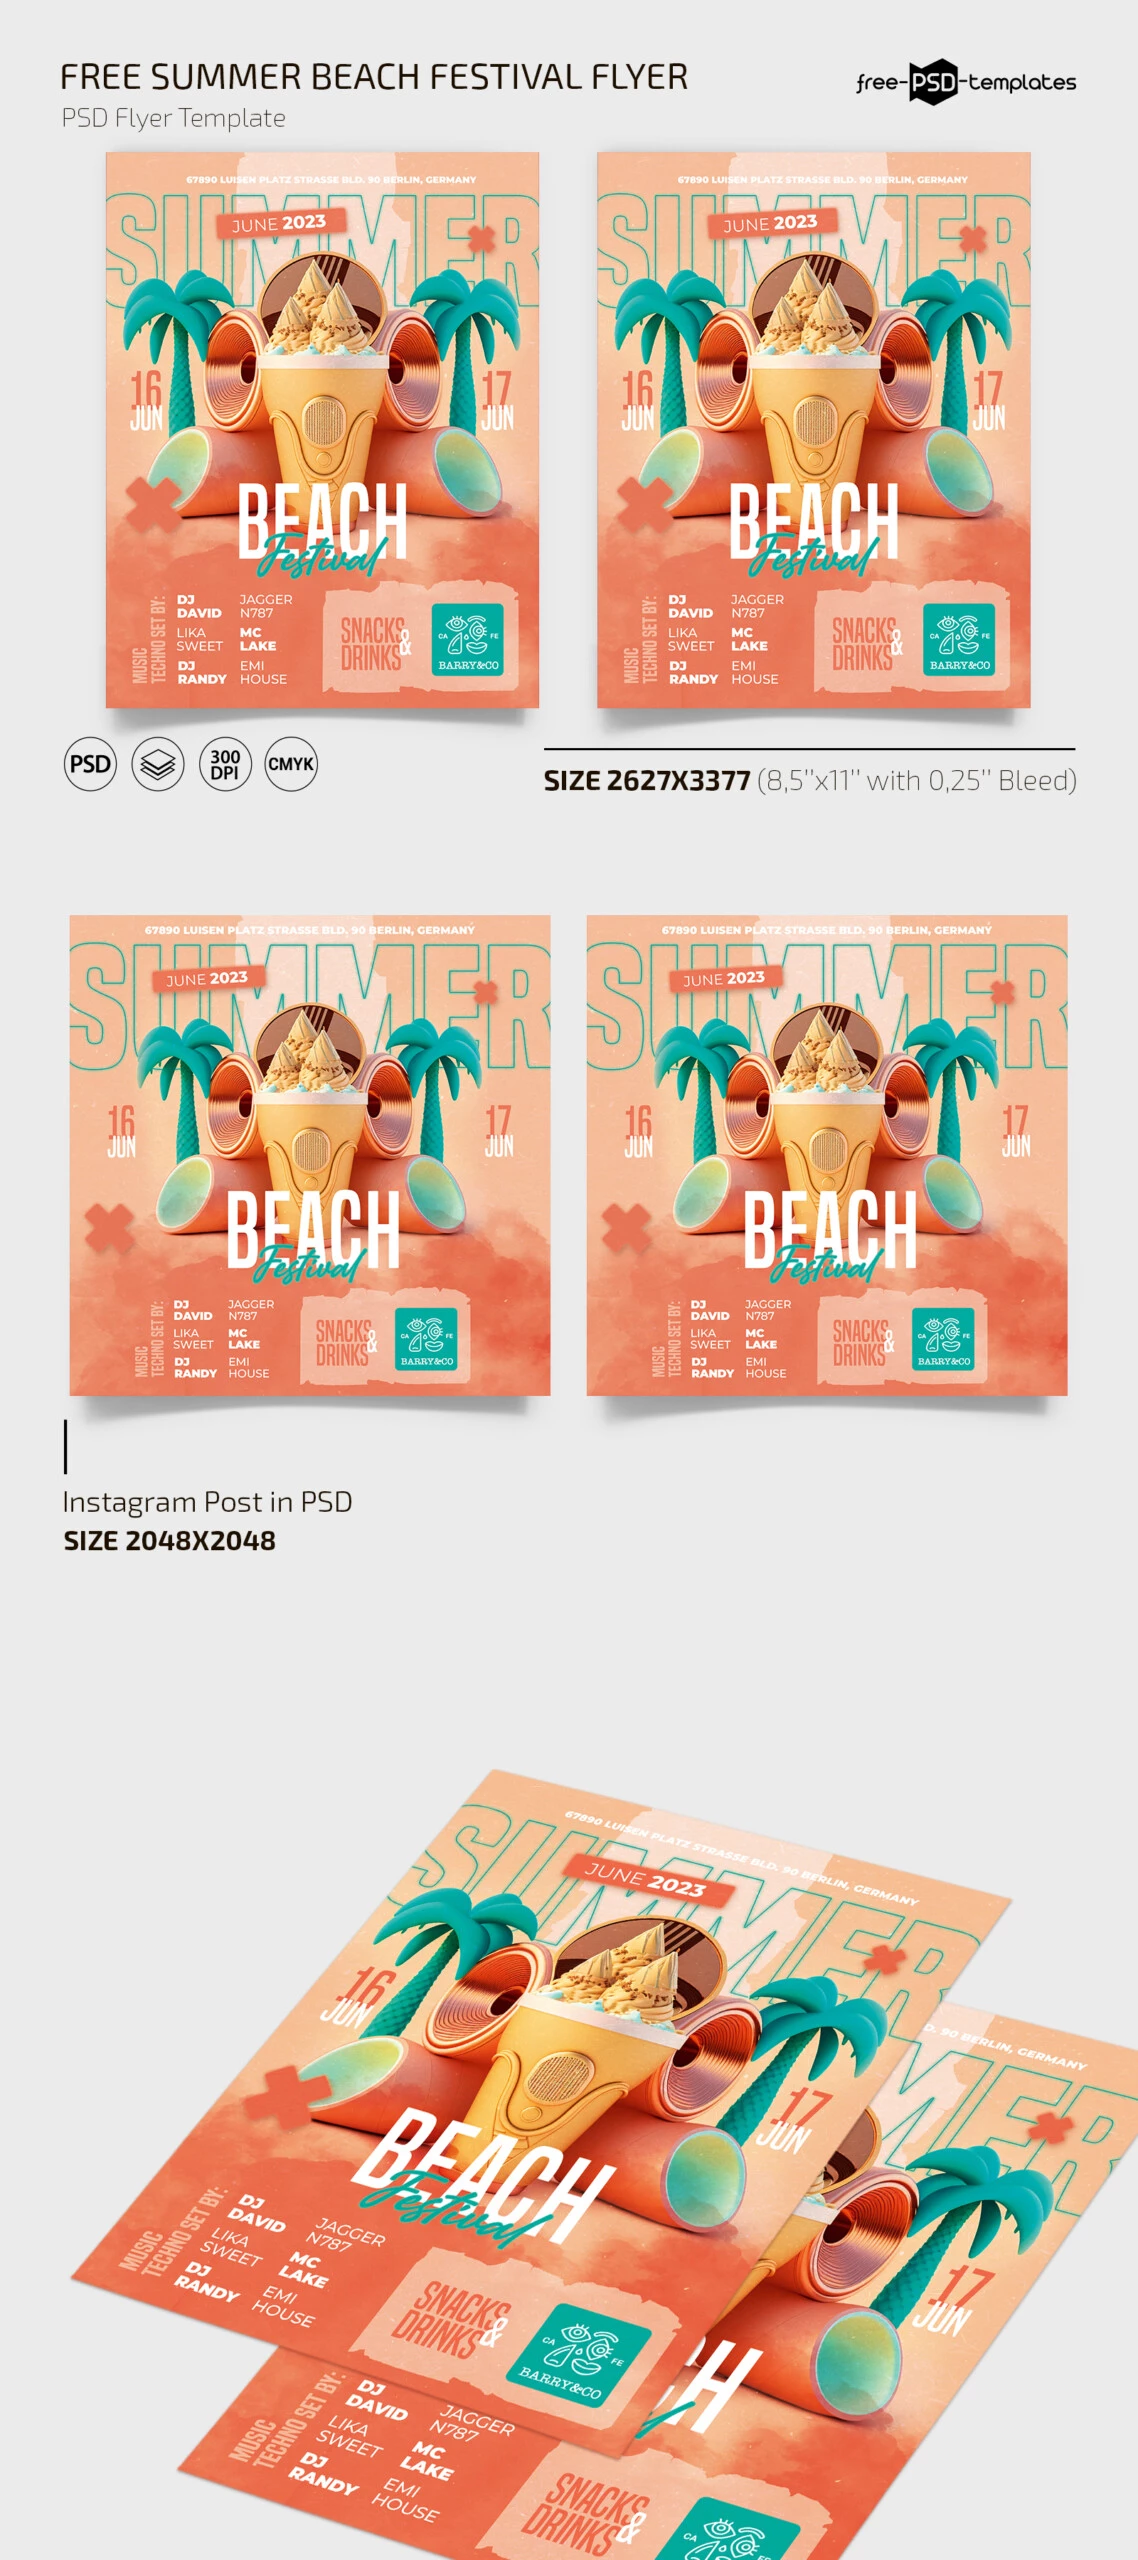 Free Summer Beach Festival Flyer Template + Instagram Post (PSD)